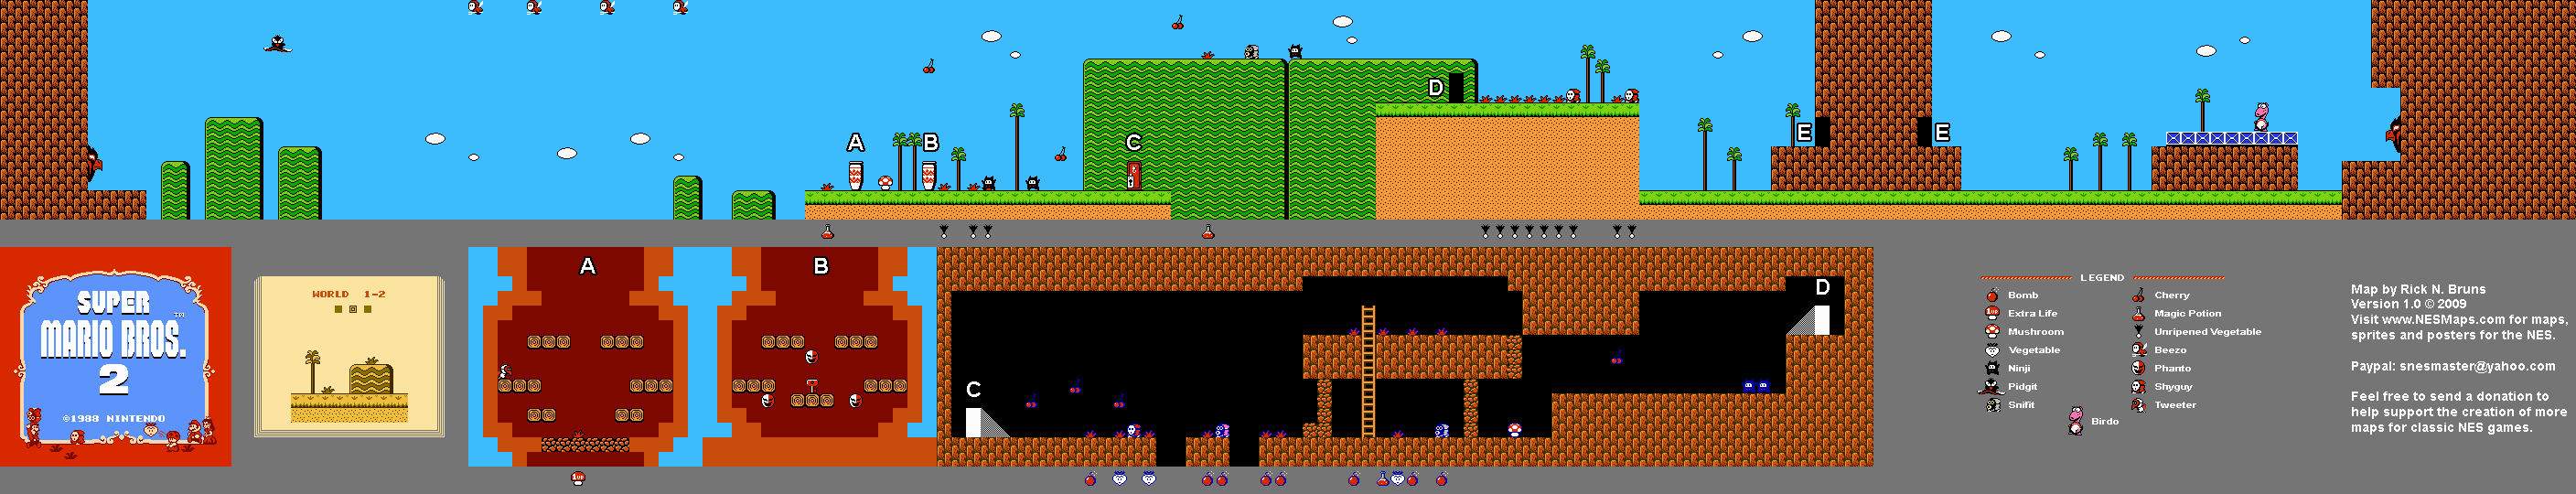 Super Mario Brothers - World 1-2 Nintendo NES Map